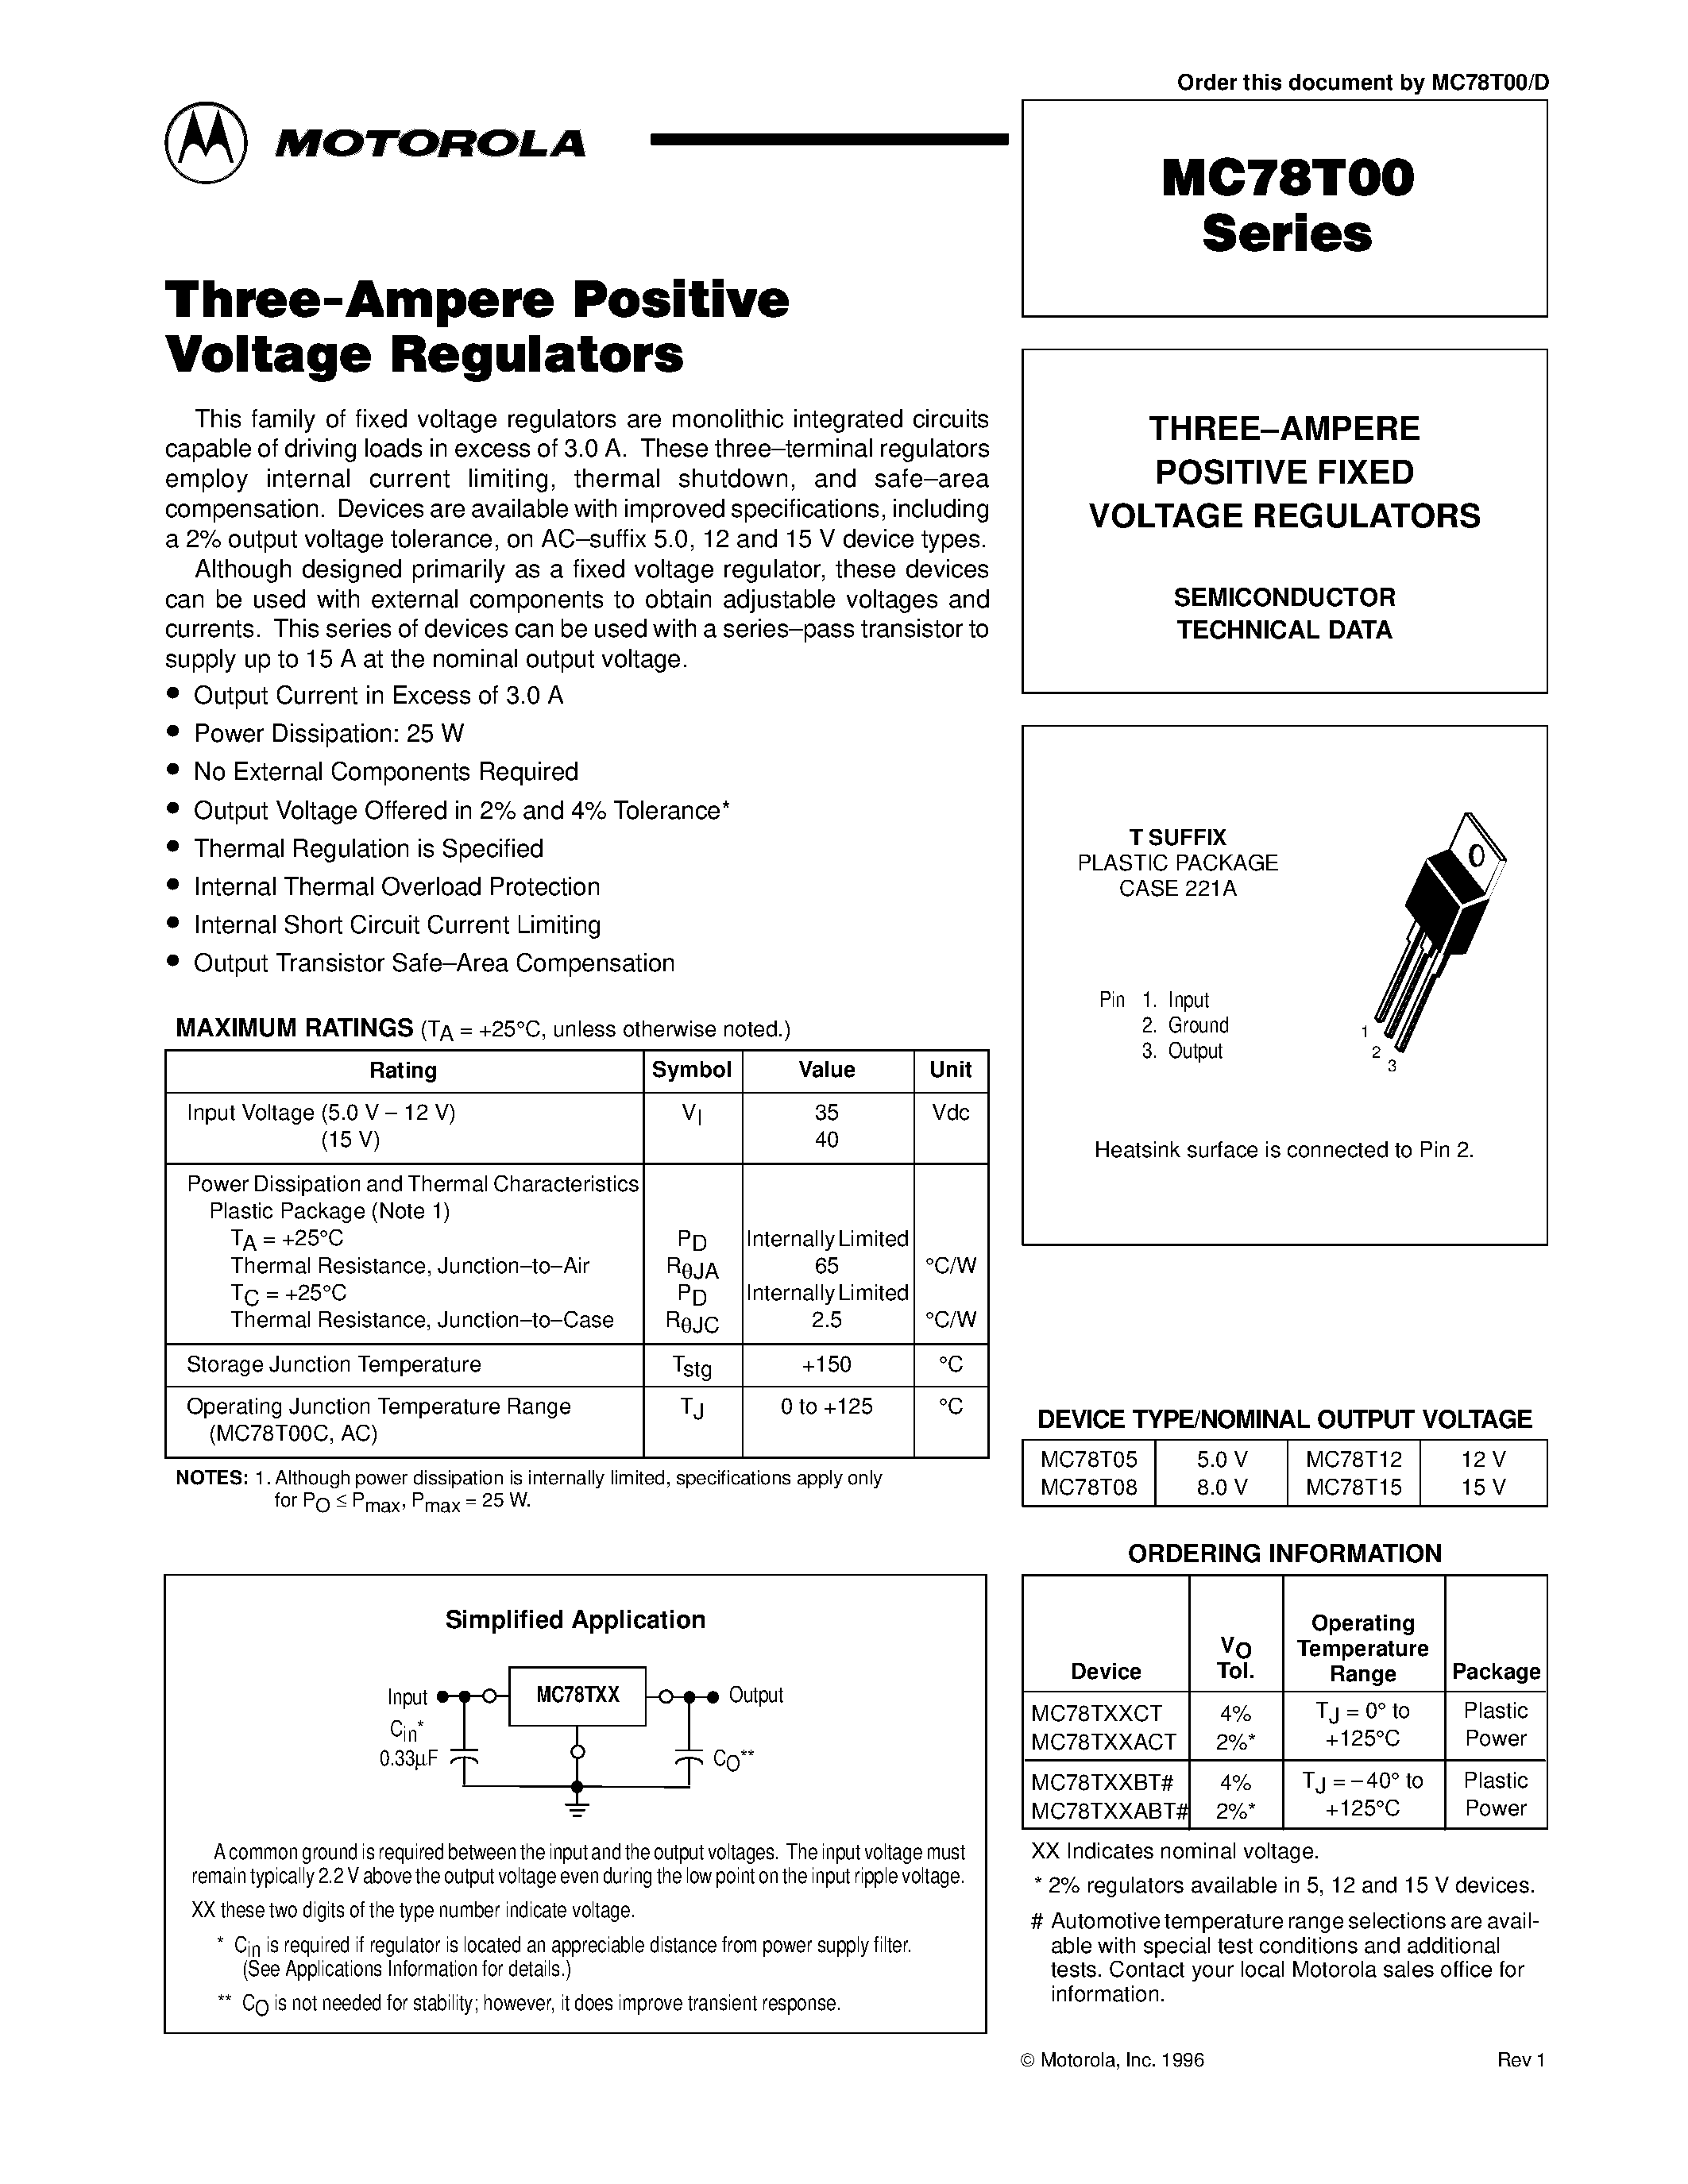 Datasheet MC78T05BTG - THREE-AMPERE POSITIVE FIXED VOLTAGE REGULATORS page 1